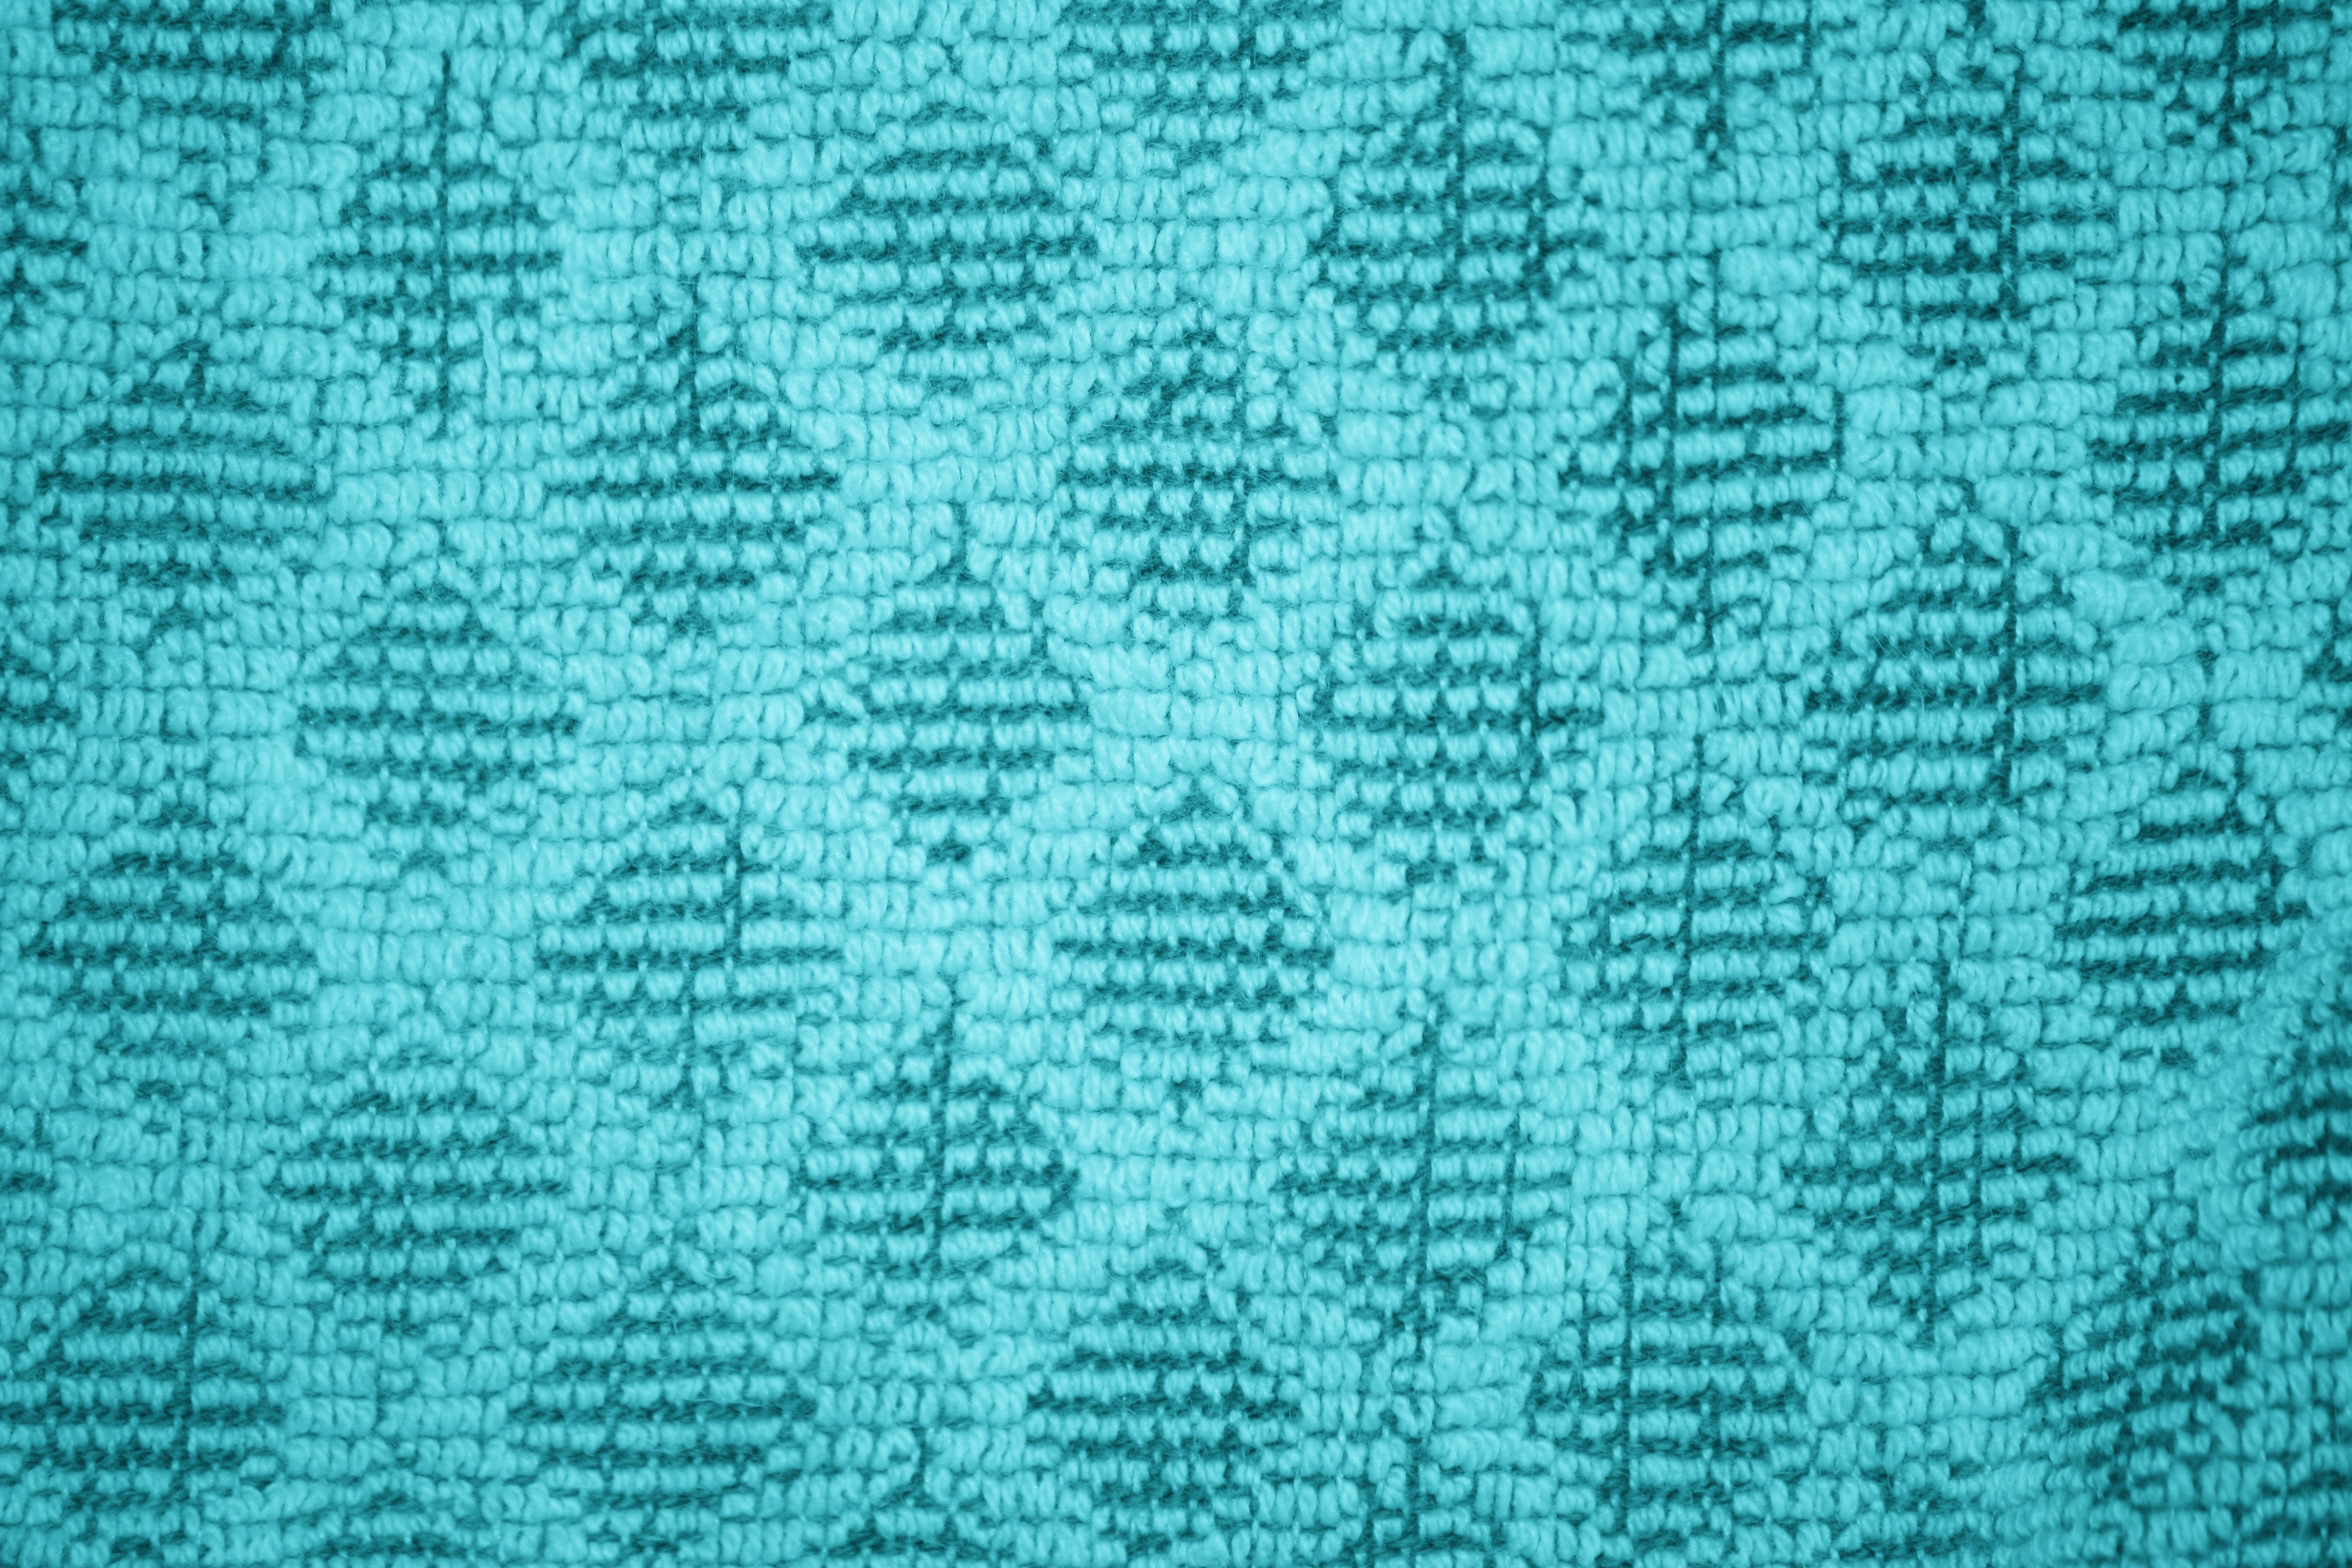 Ravelry: Easy Knit Dish Towel Topper pattern by Debbie Trainor